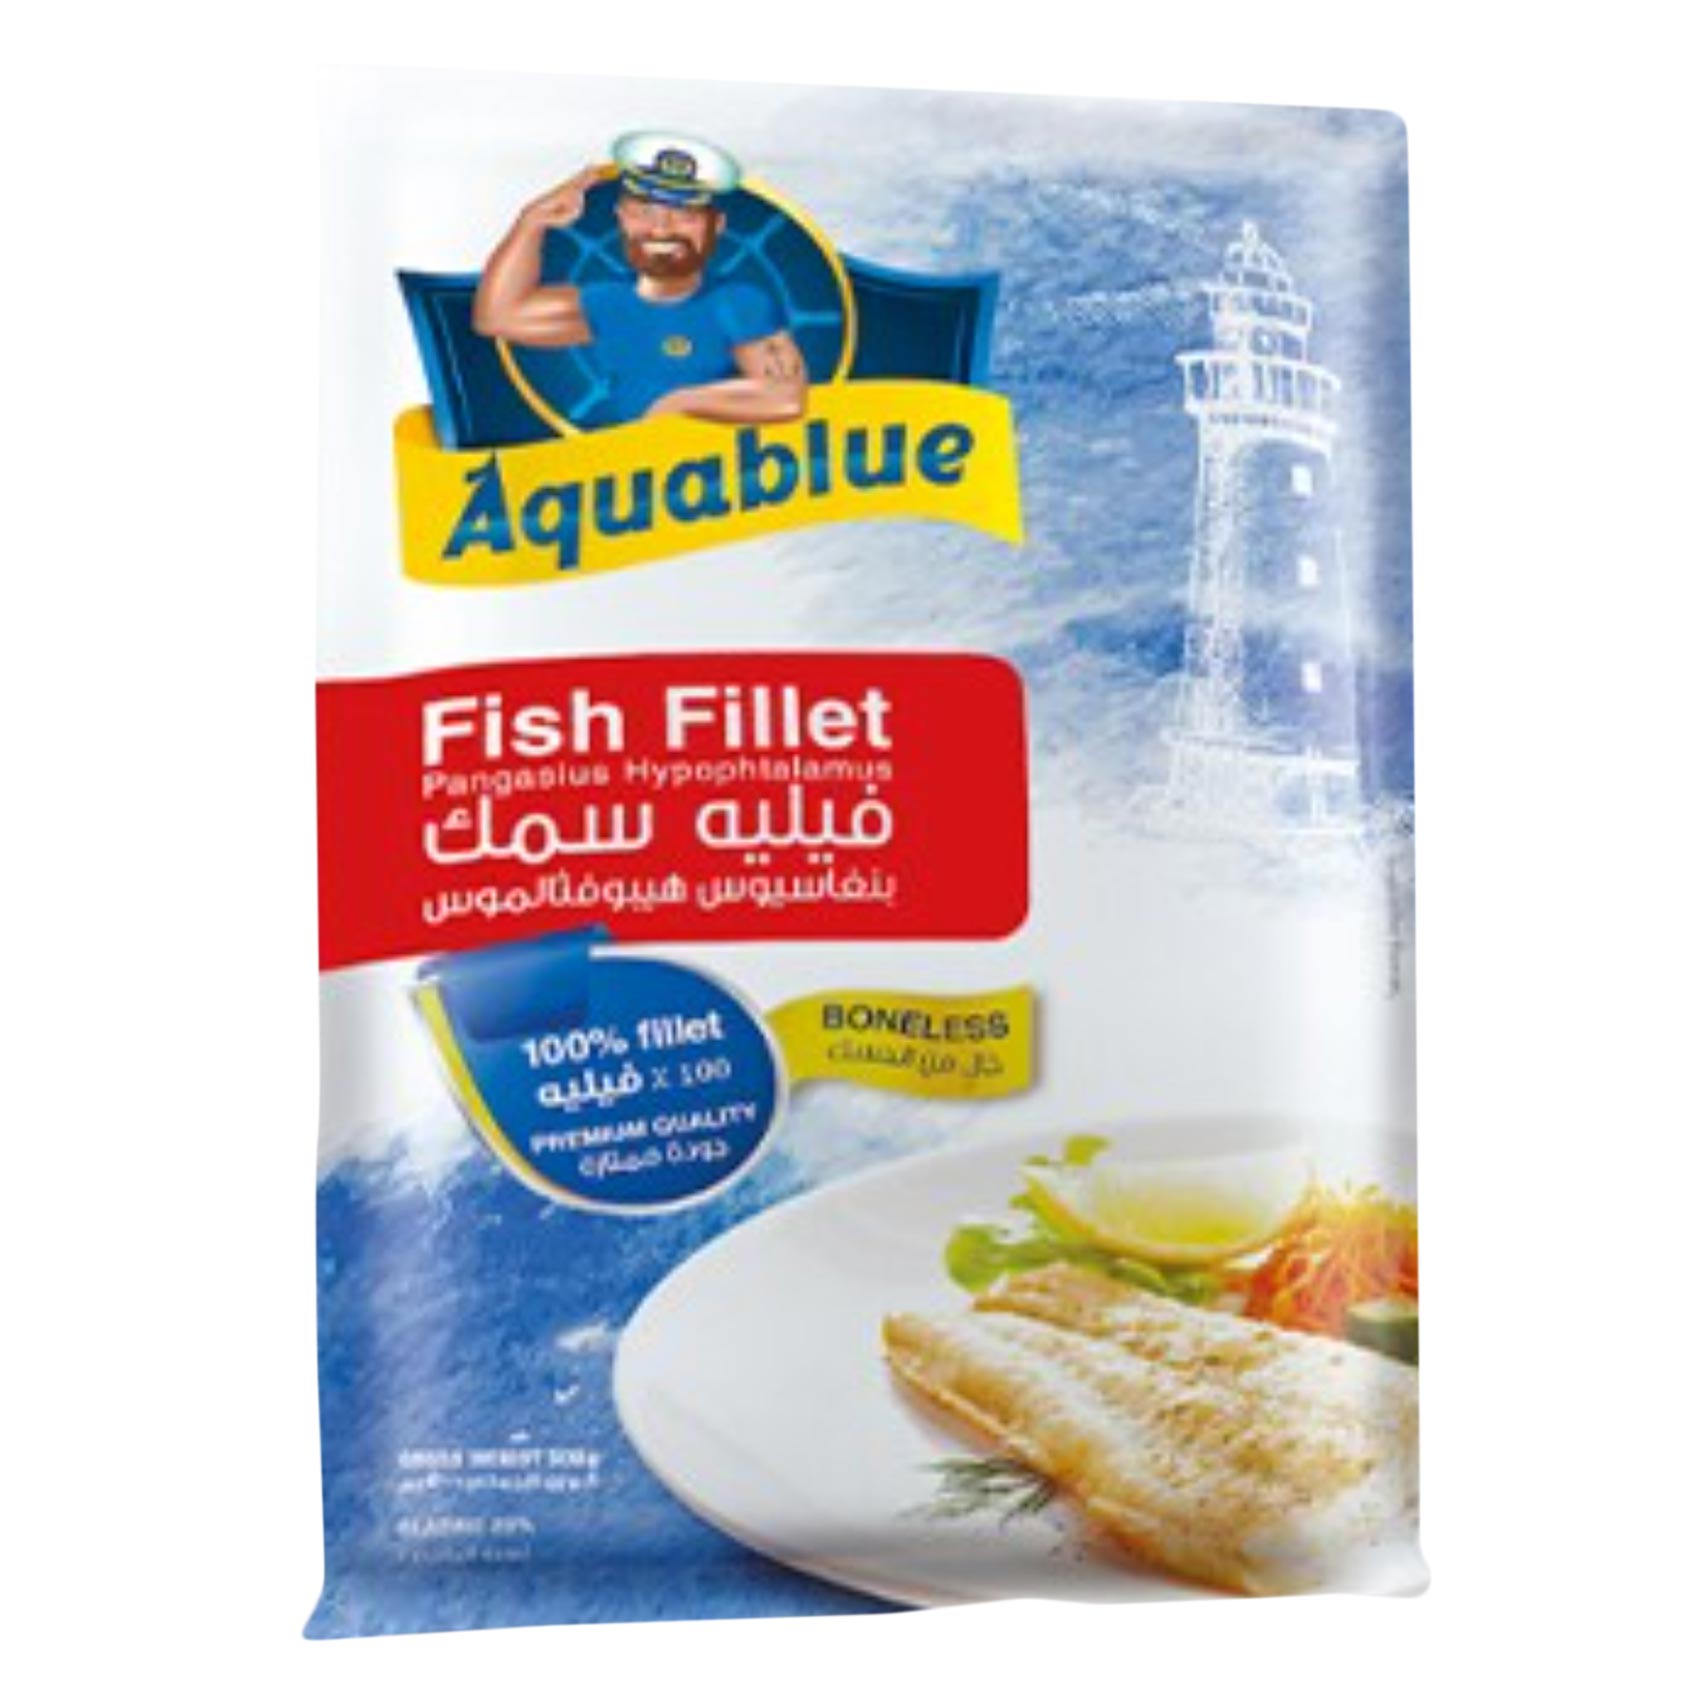 Aqua Blue Pangasius Boneless Fish Fillet 1kg